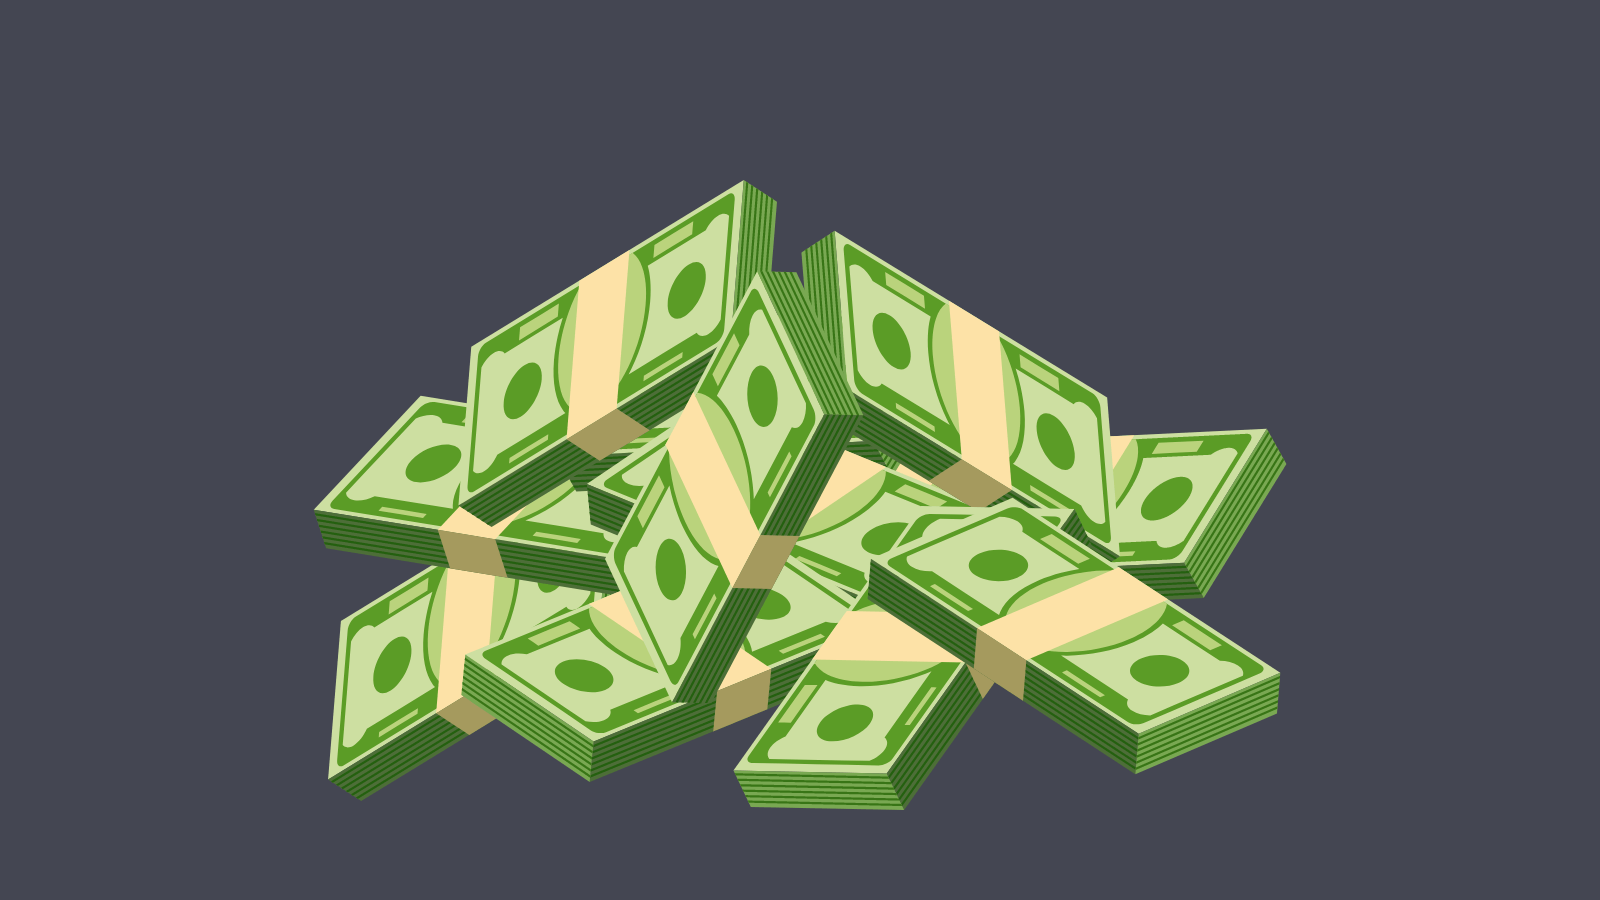 A pile of dollar bill bundles